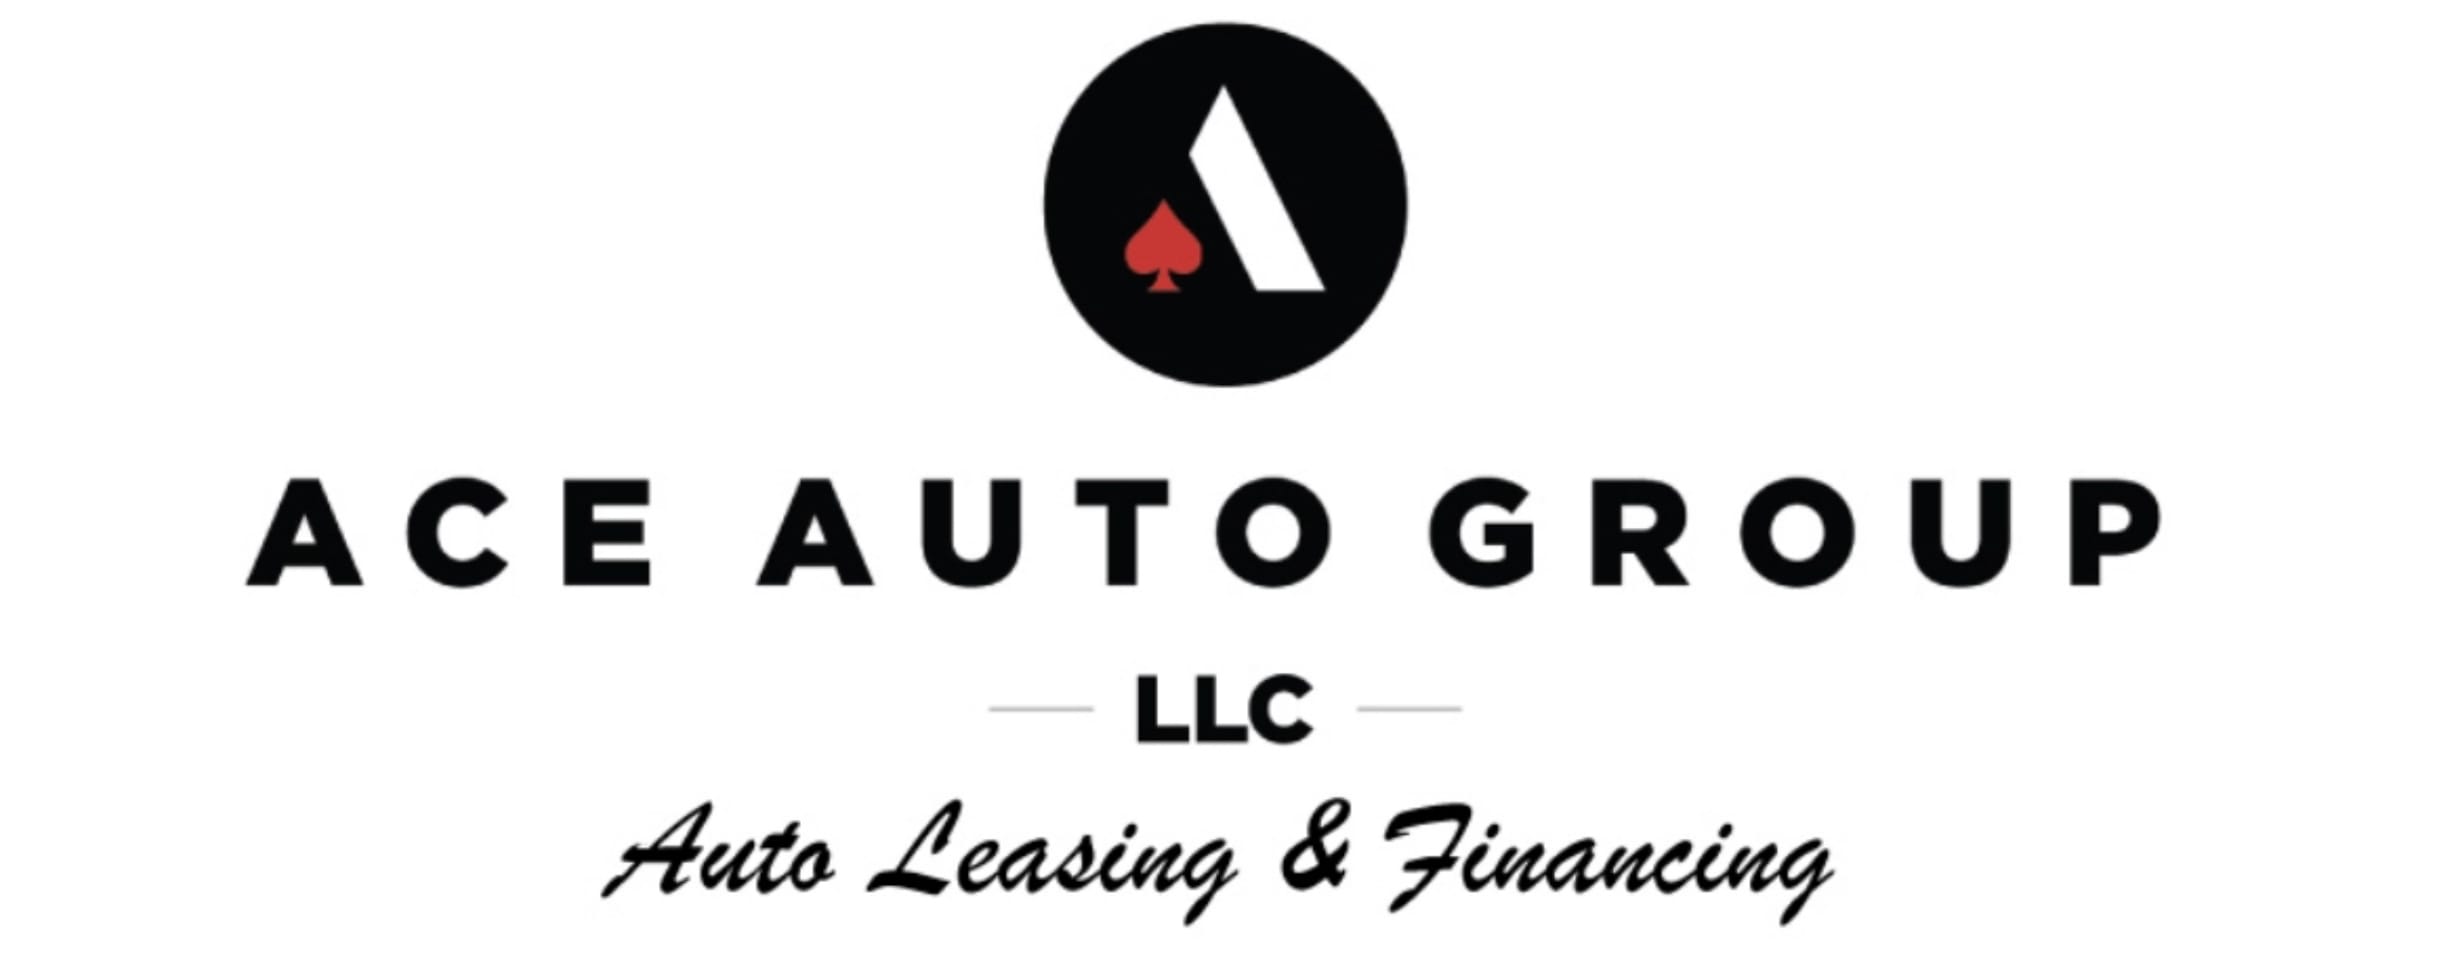 Ace Auto Group LLC